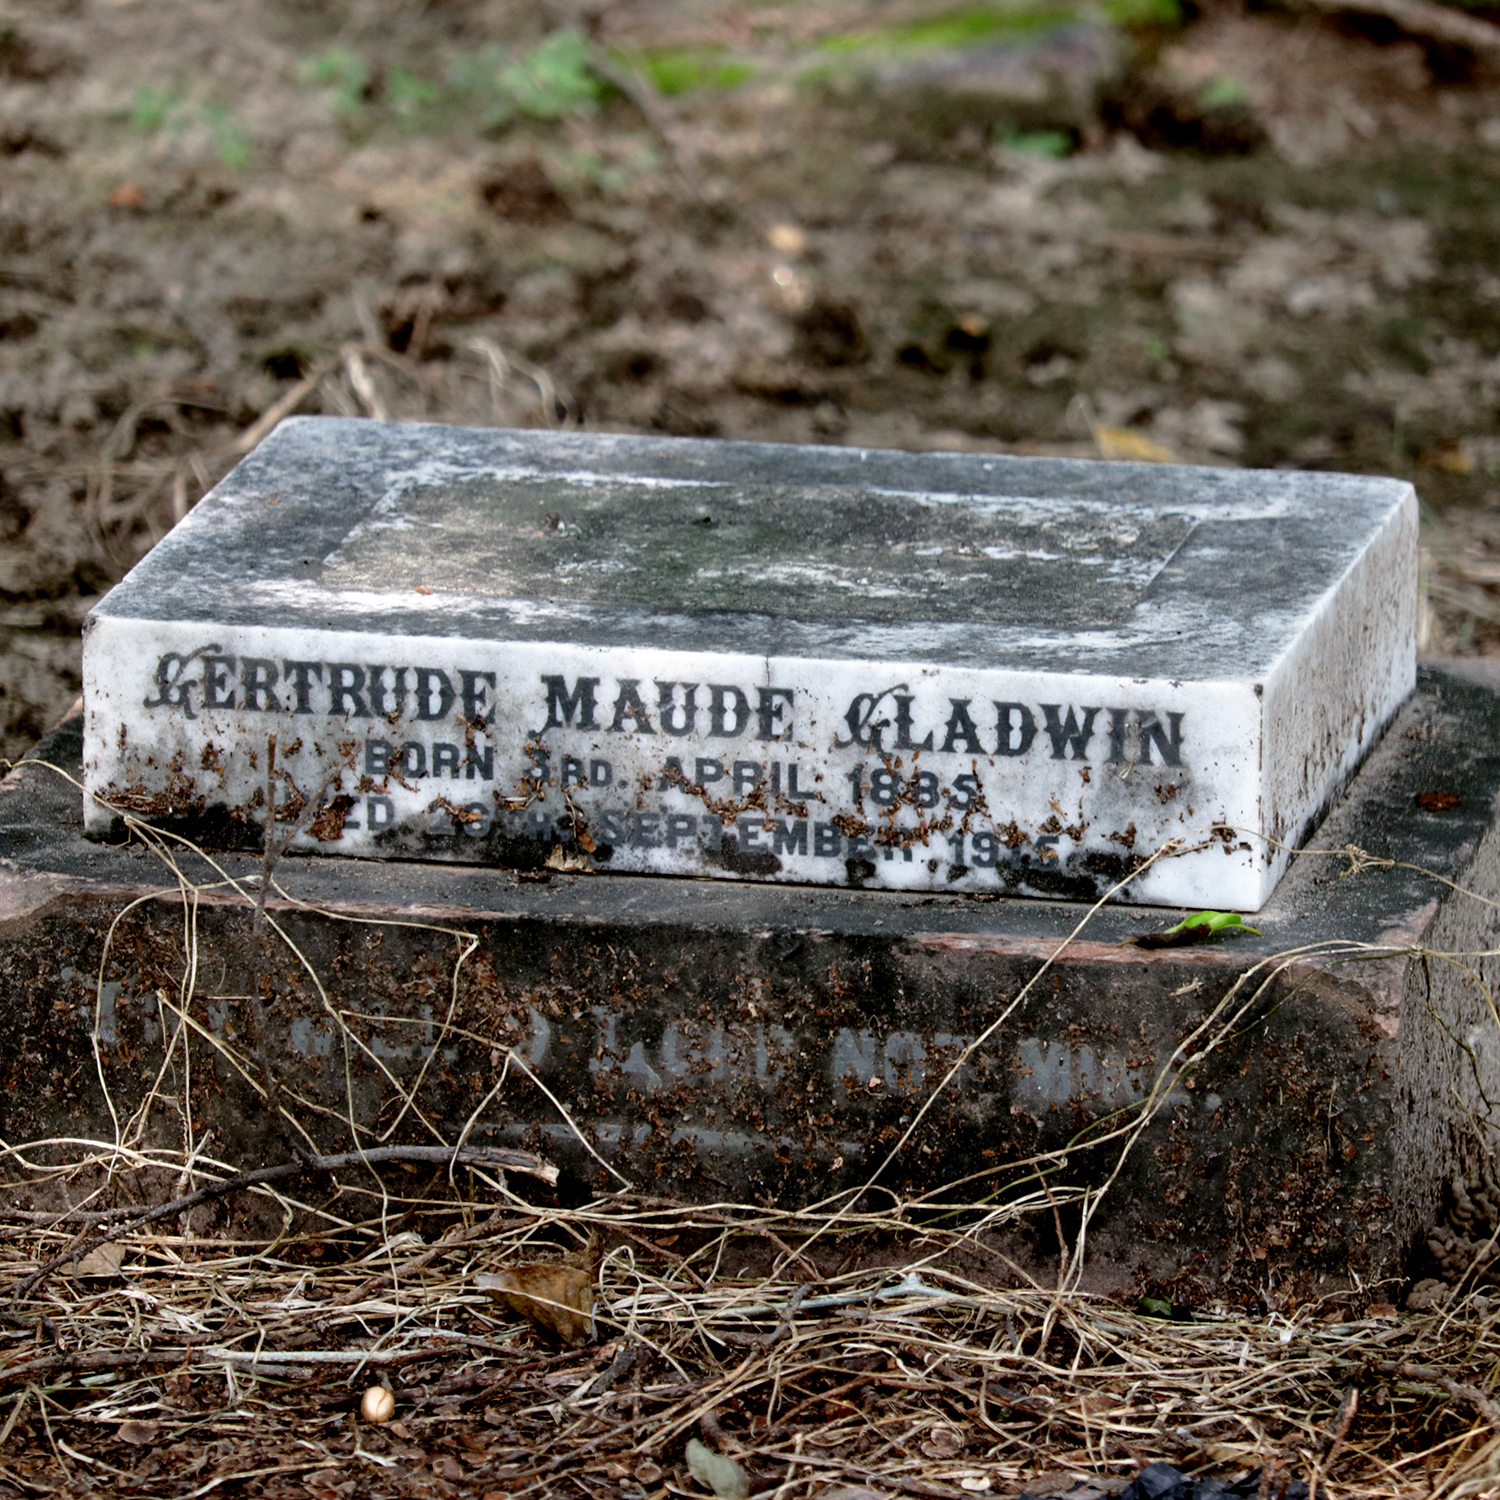 Gertrude Maude Gladwin